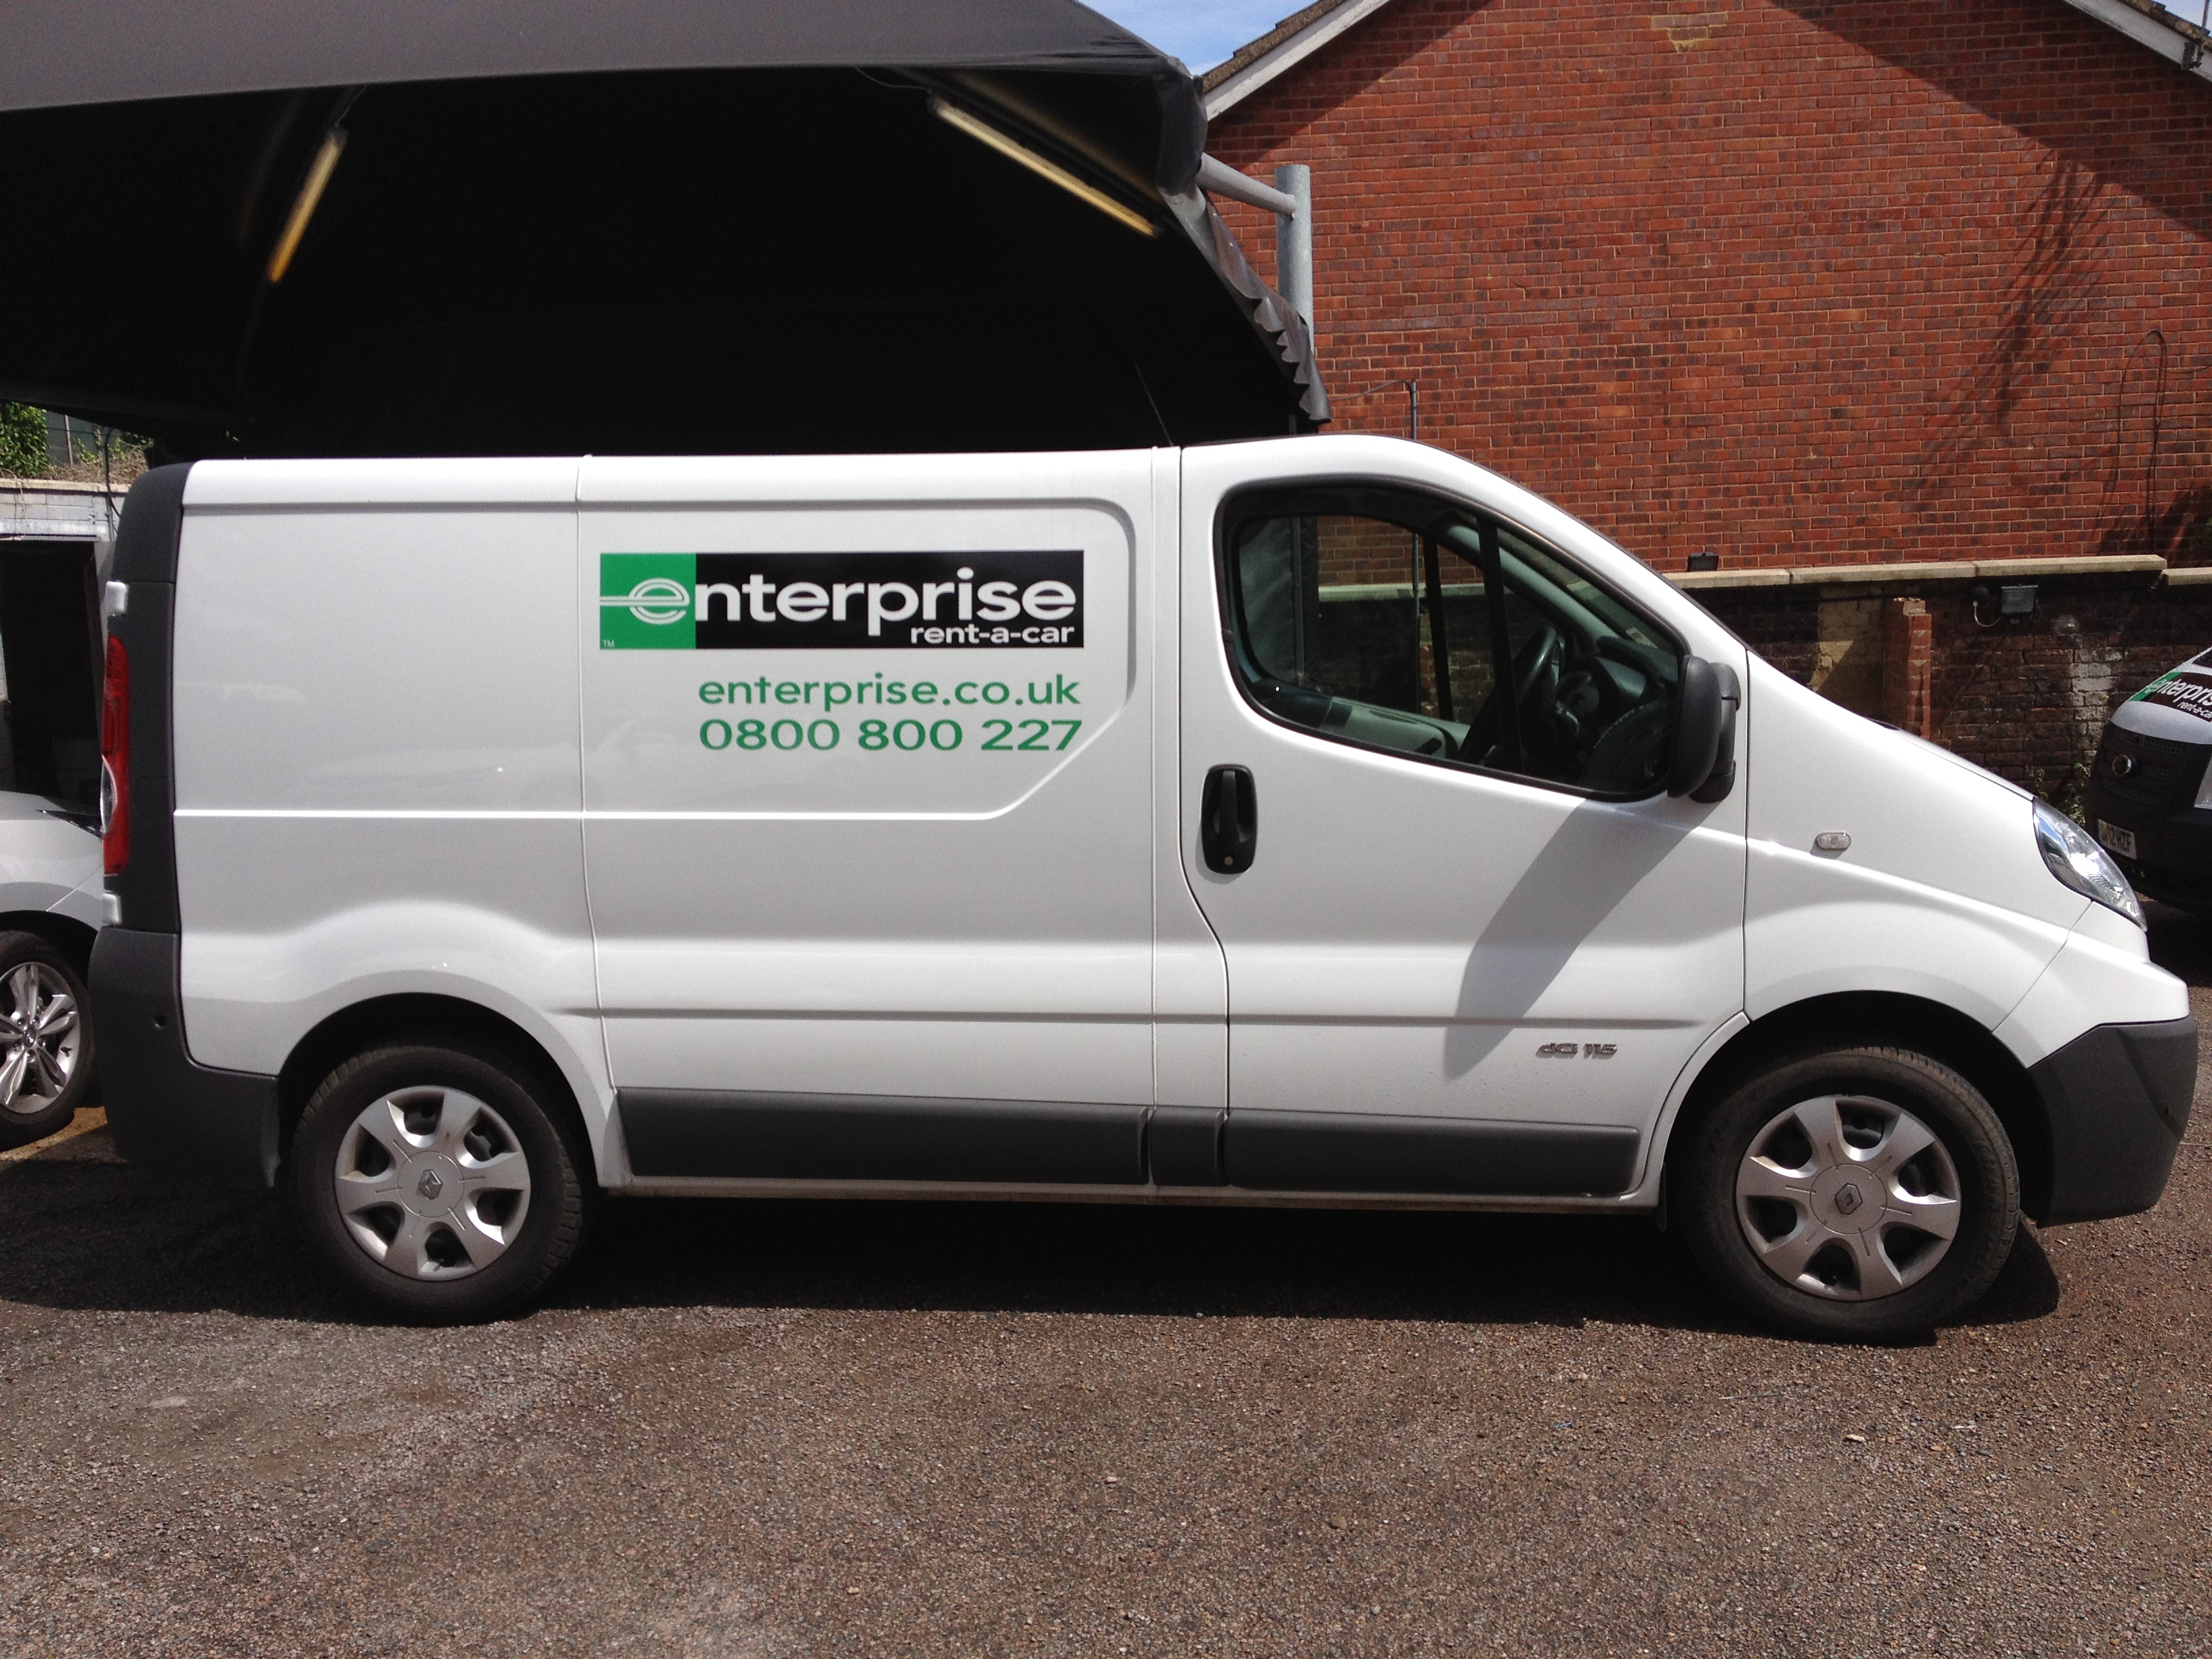 enterprise van hire near me